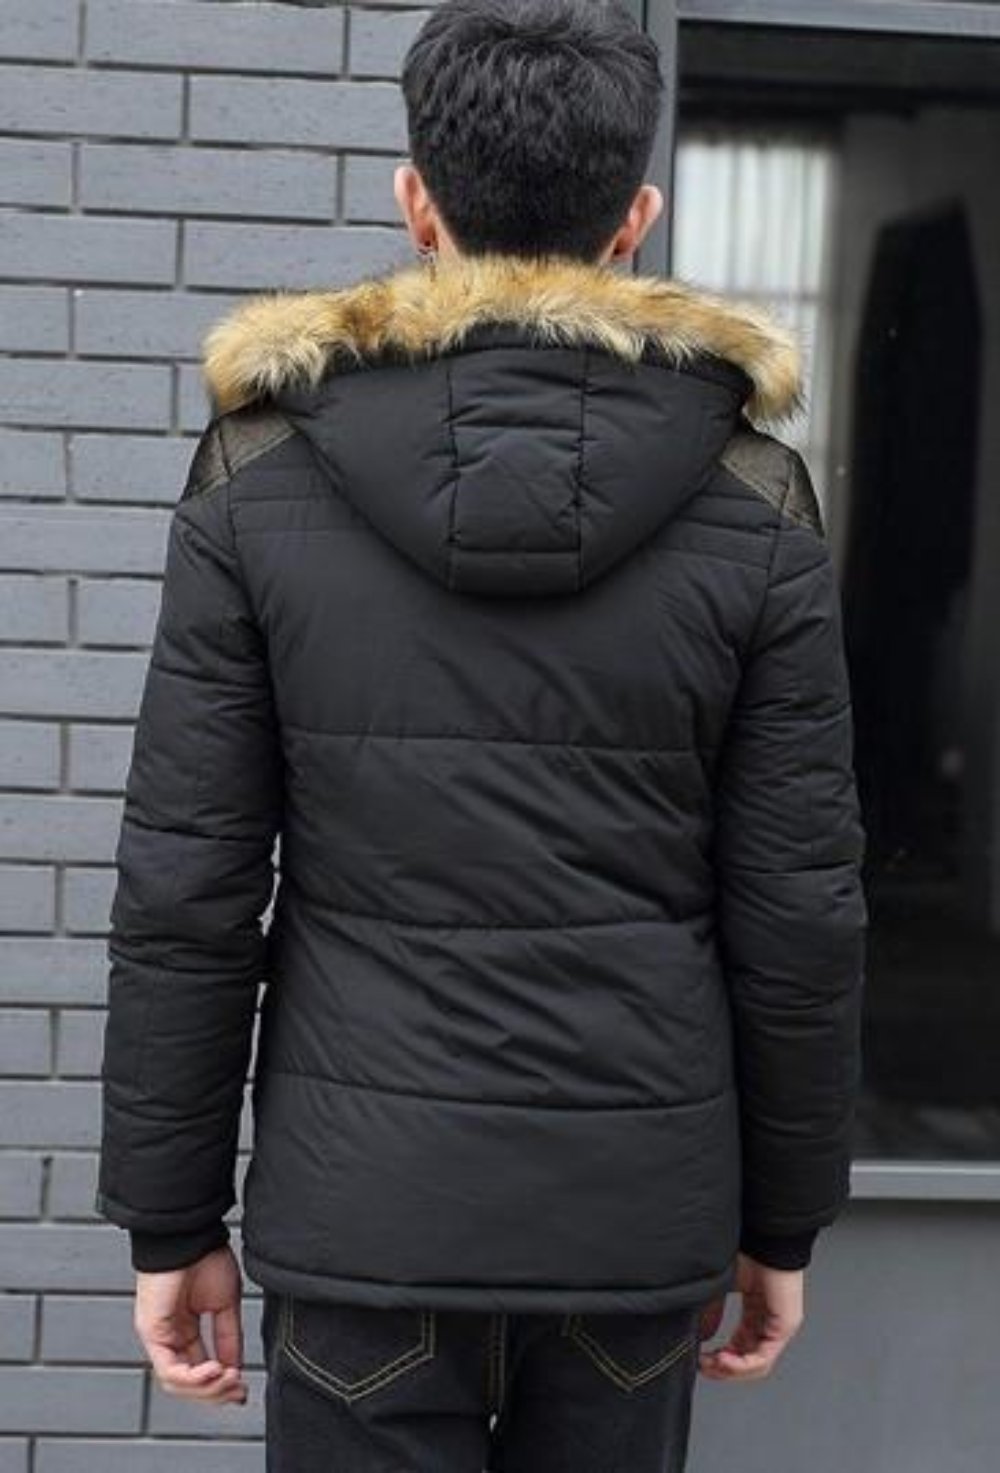 Mens Winter Hooded Coat in Beige